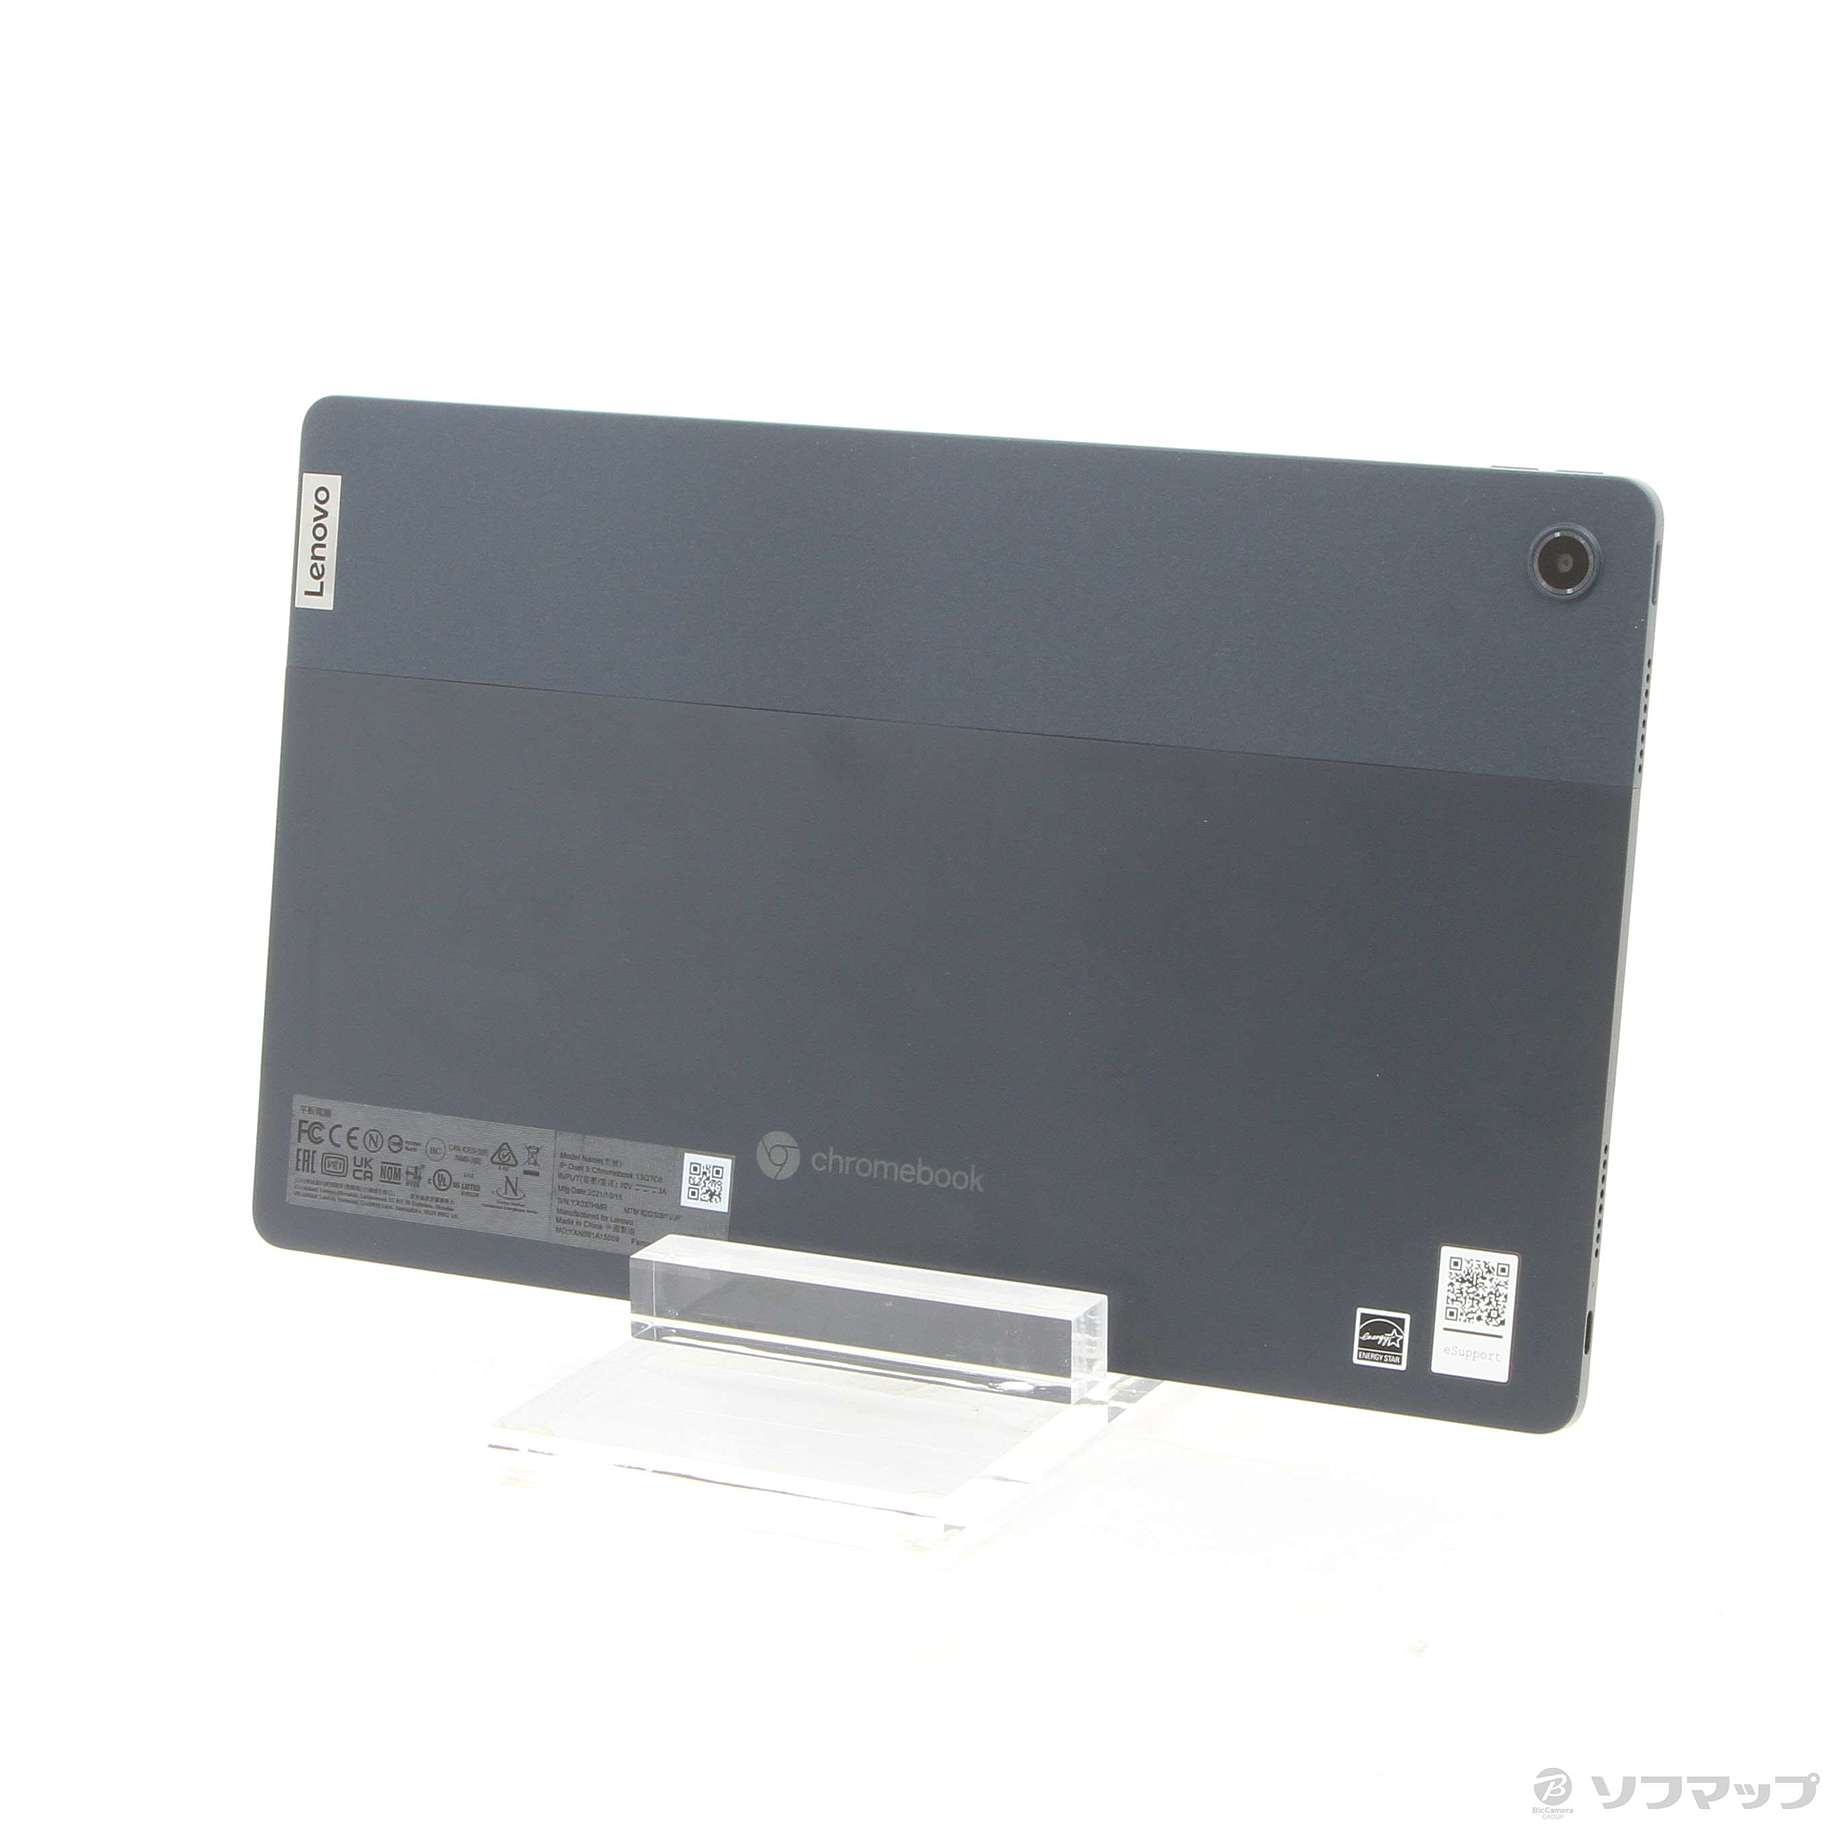 Lenovo IdeaPad Duet 560 Chromebookアビスブルー-